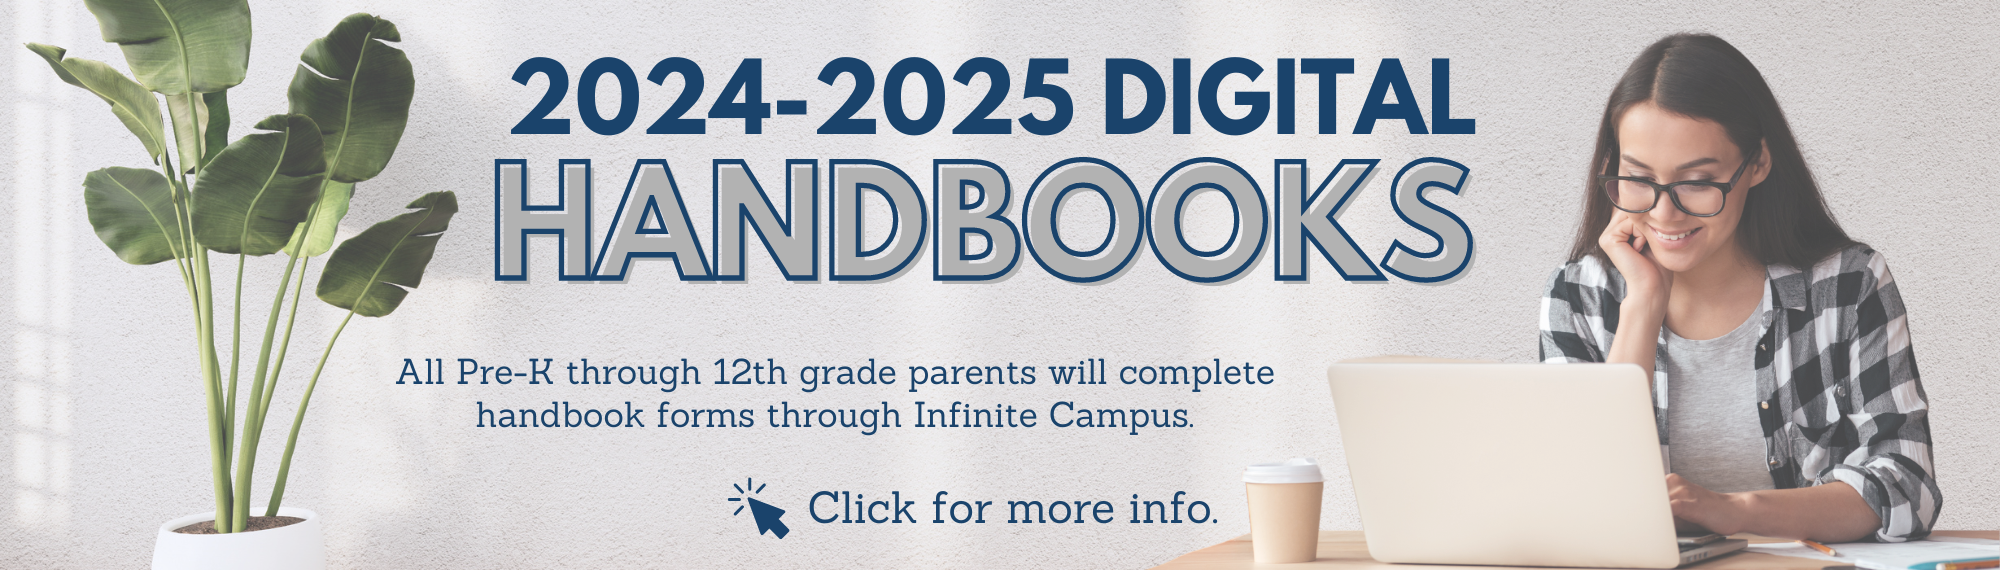 2024-2025 Digital Handbooks - Click for more info